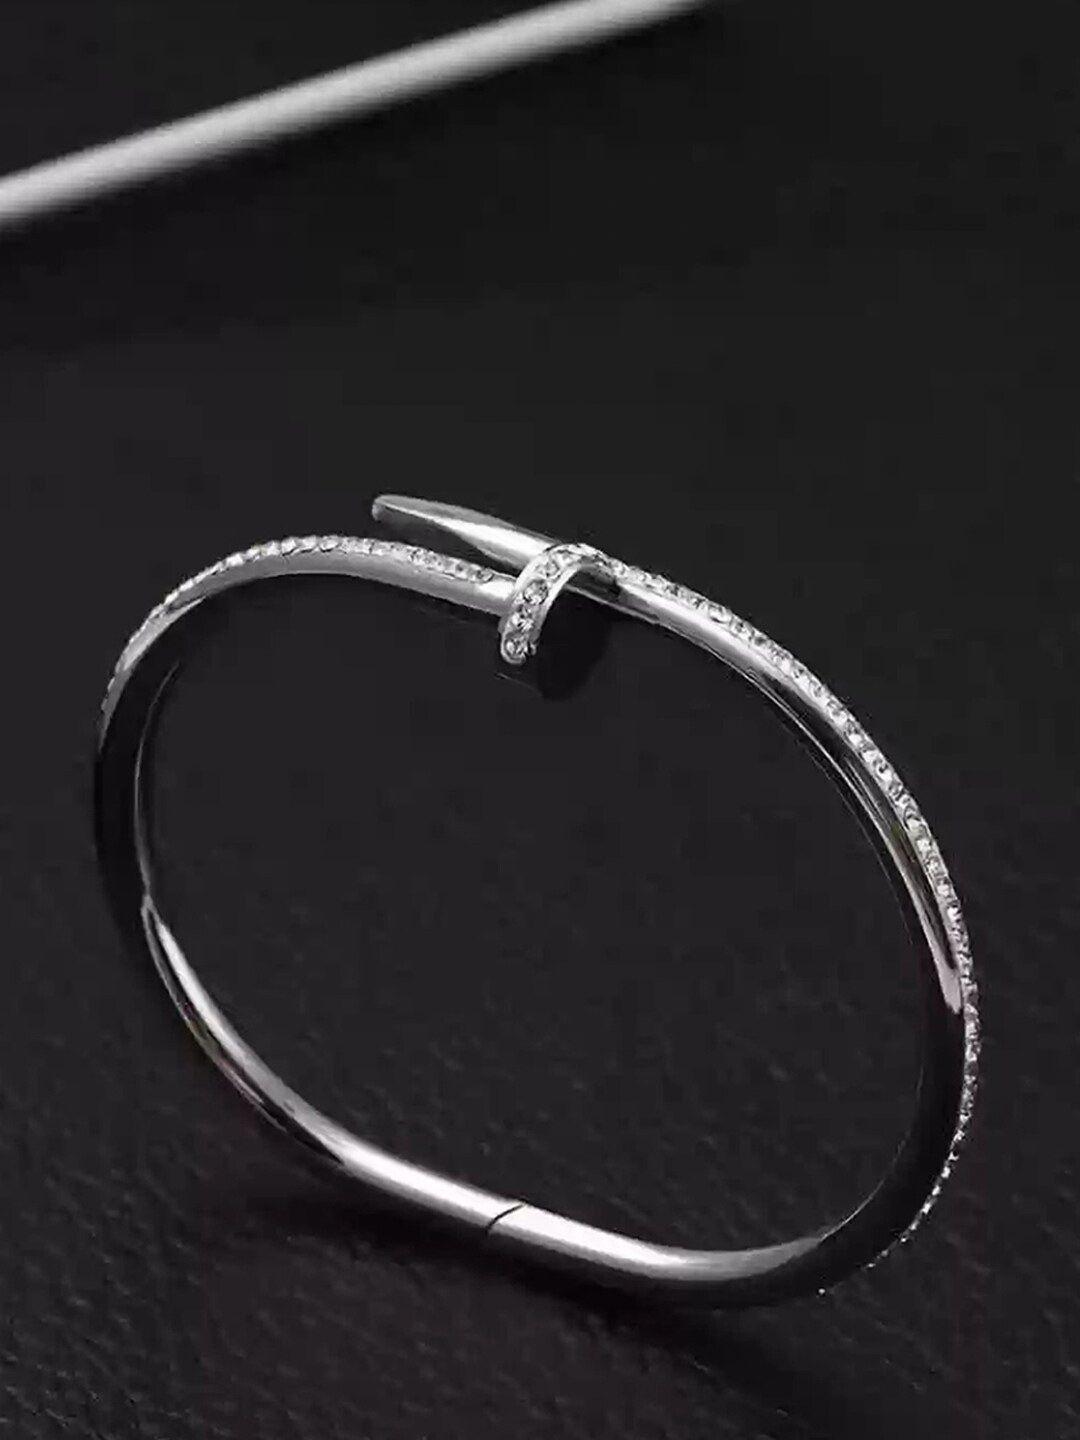 designs & you women silver-toned & white american diamond silver-plated cuff bracelet